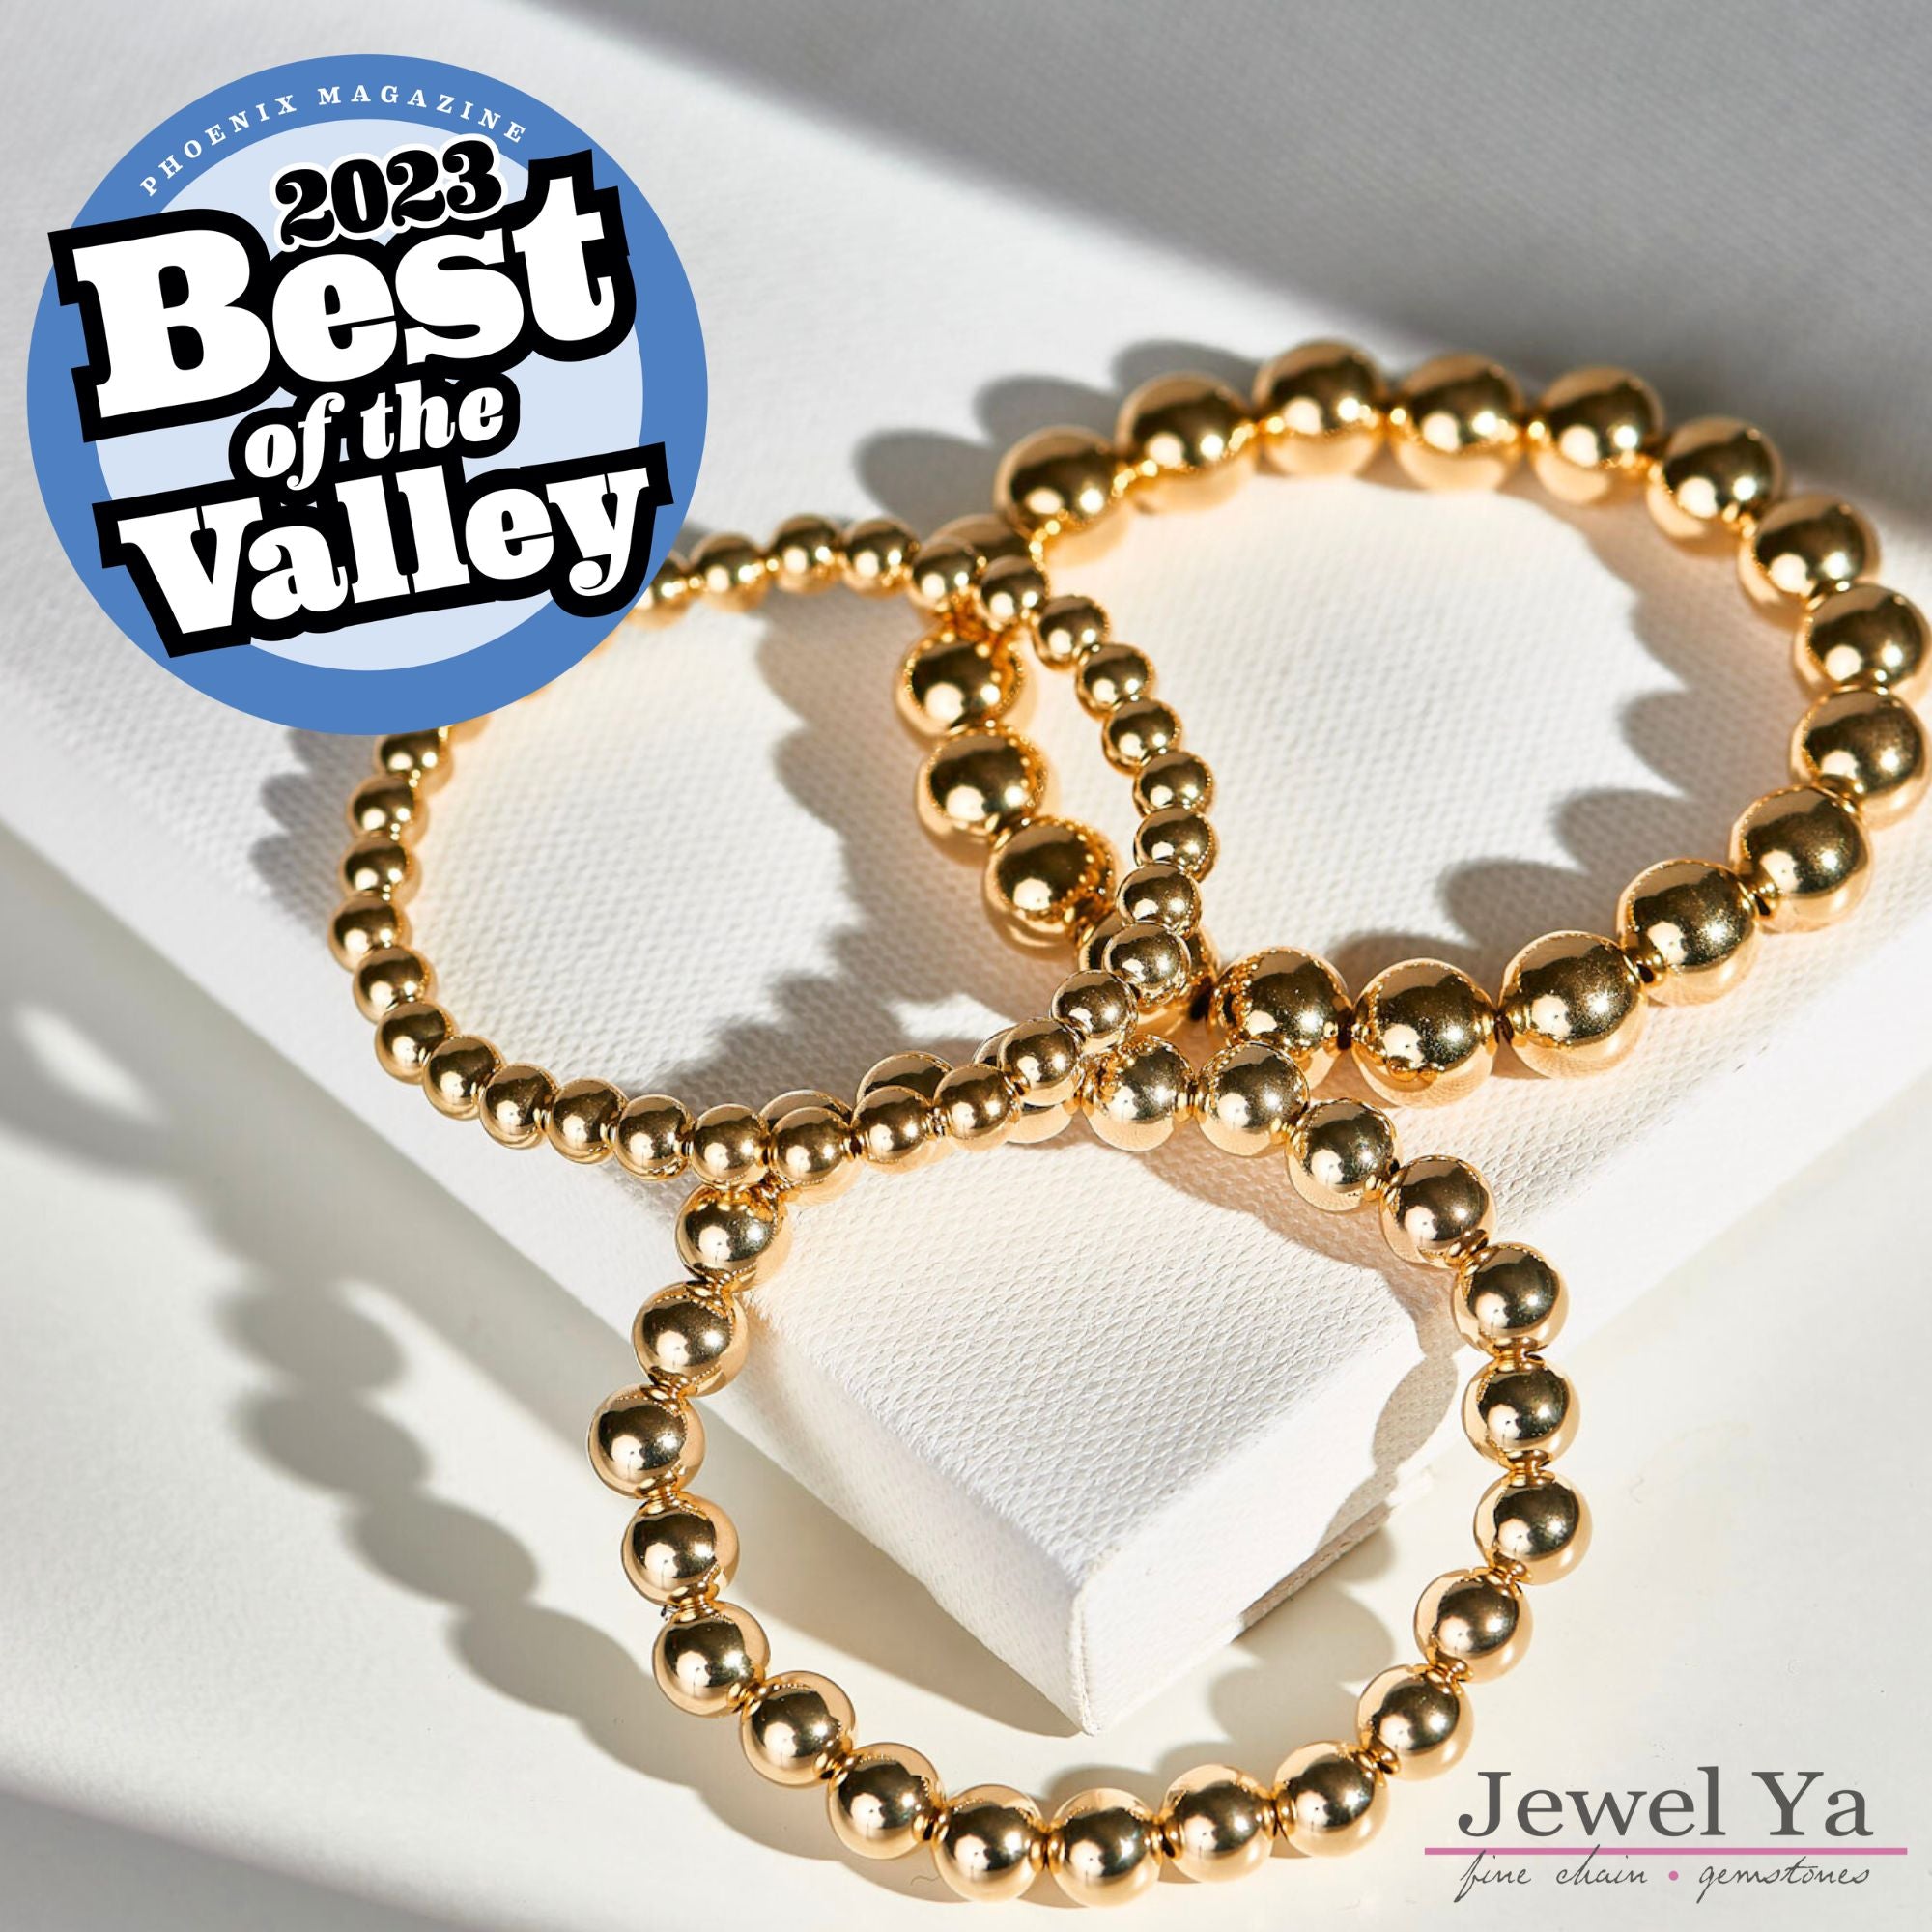 4mm & 6mm 14k Gold Filled Beaded Bracelet - Jewel Ya